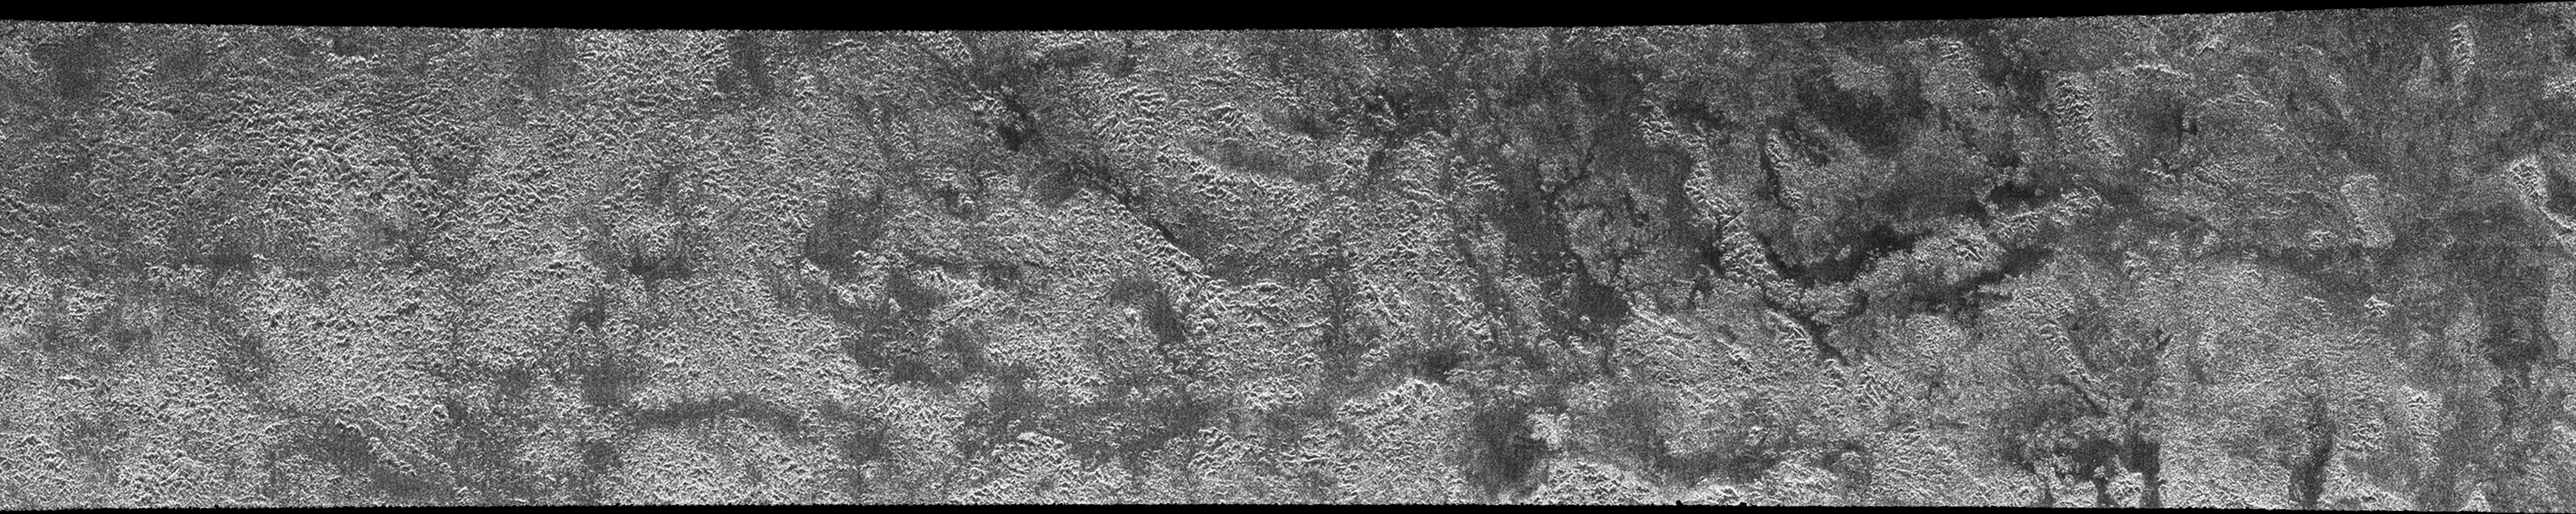 AGU: Titan: Volcanically active world, or… | The Planetary Society